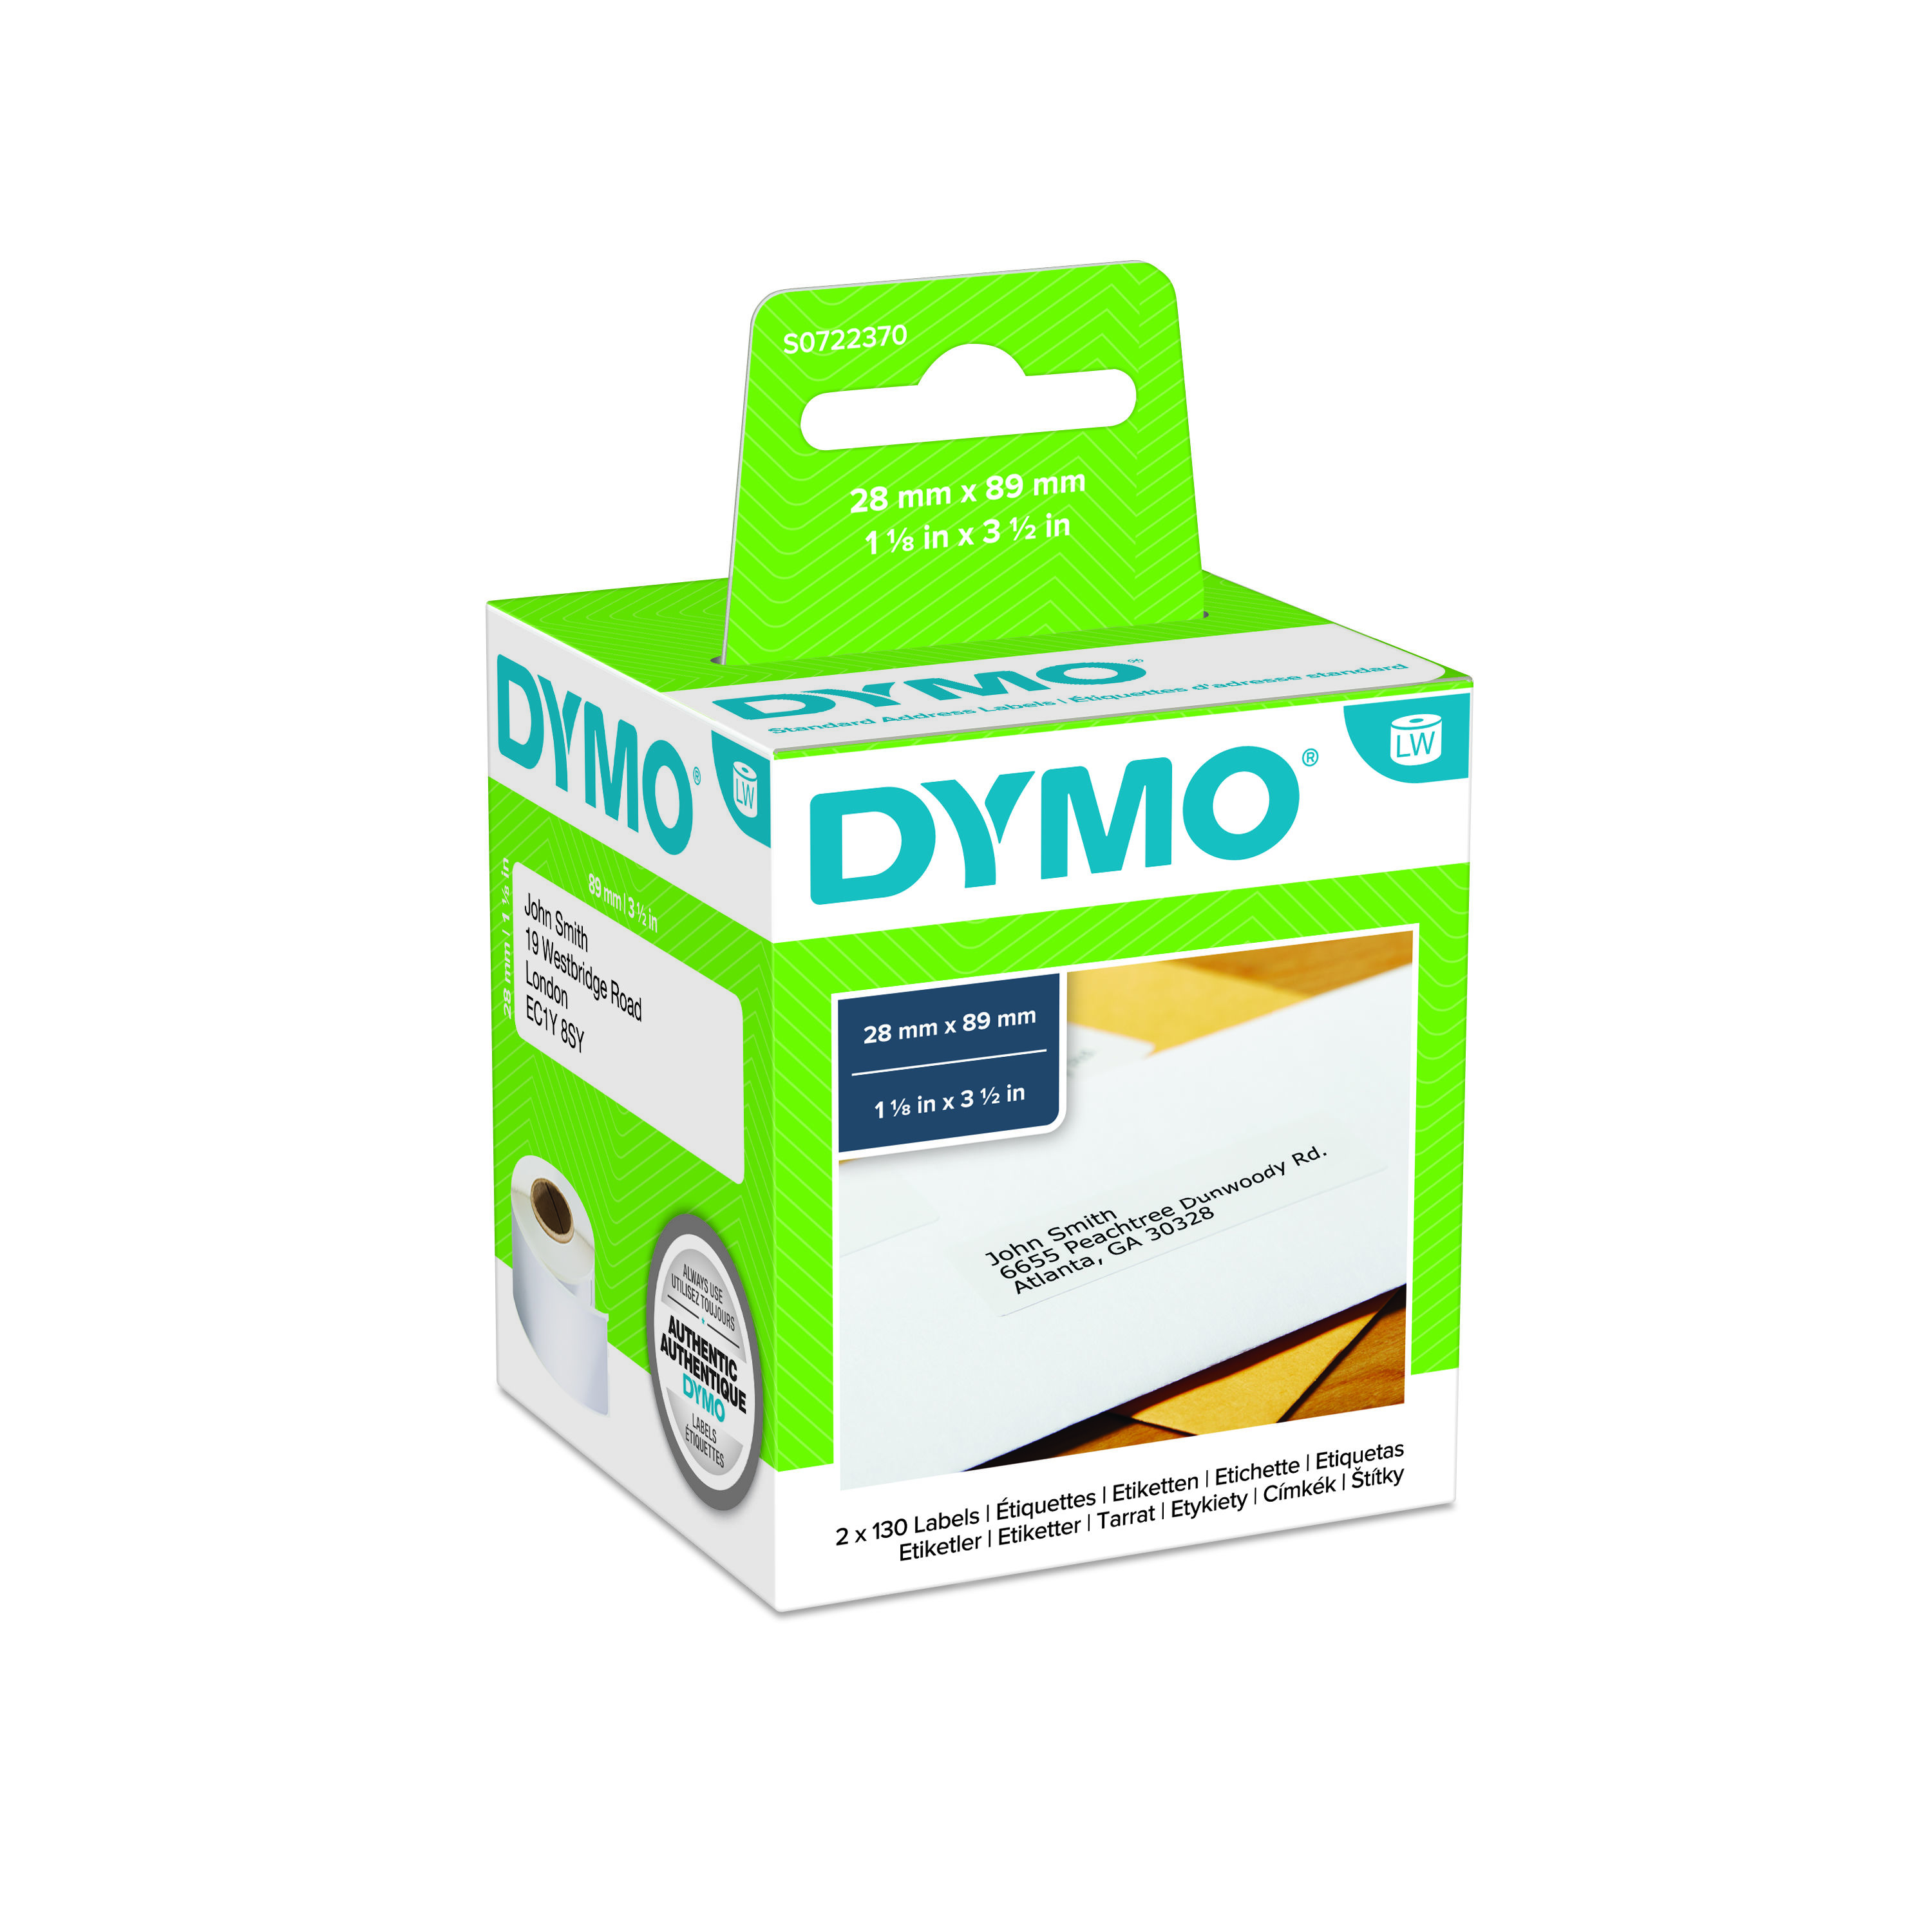 Dymo White Black Print Label Roll, 89mm Width, 28mm Height, 130Per Roll Qty